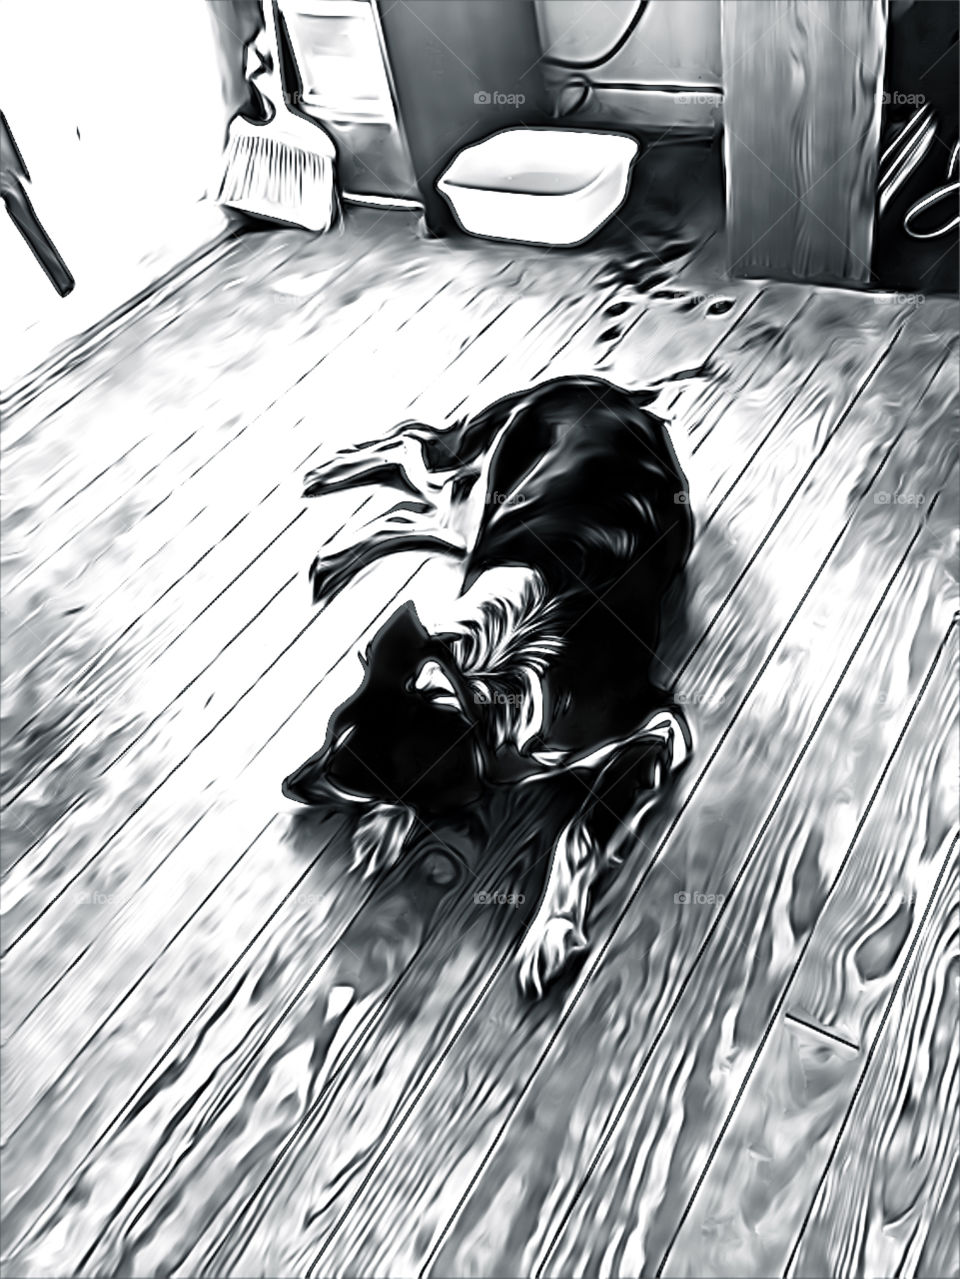 Dog on wooden floor 